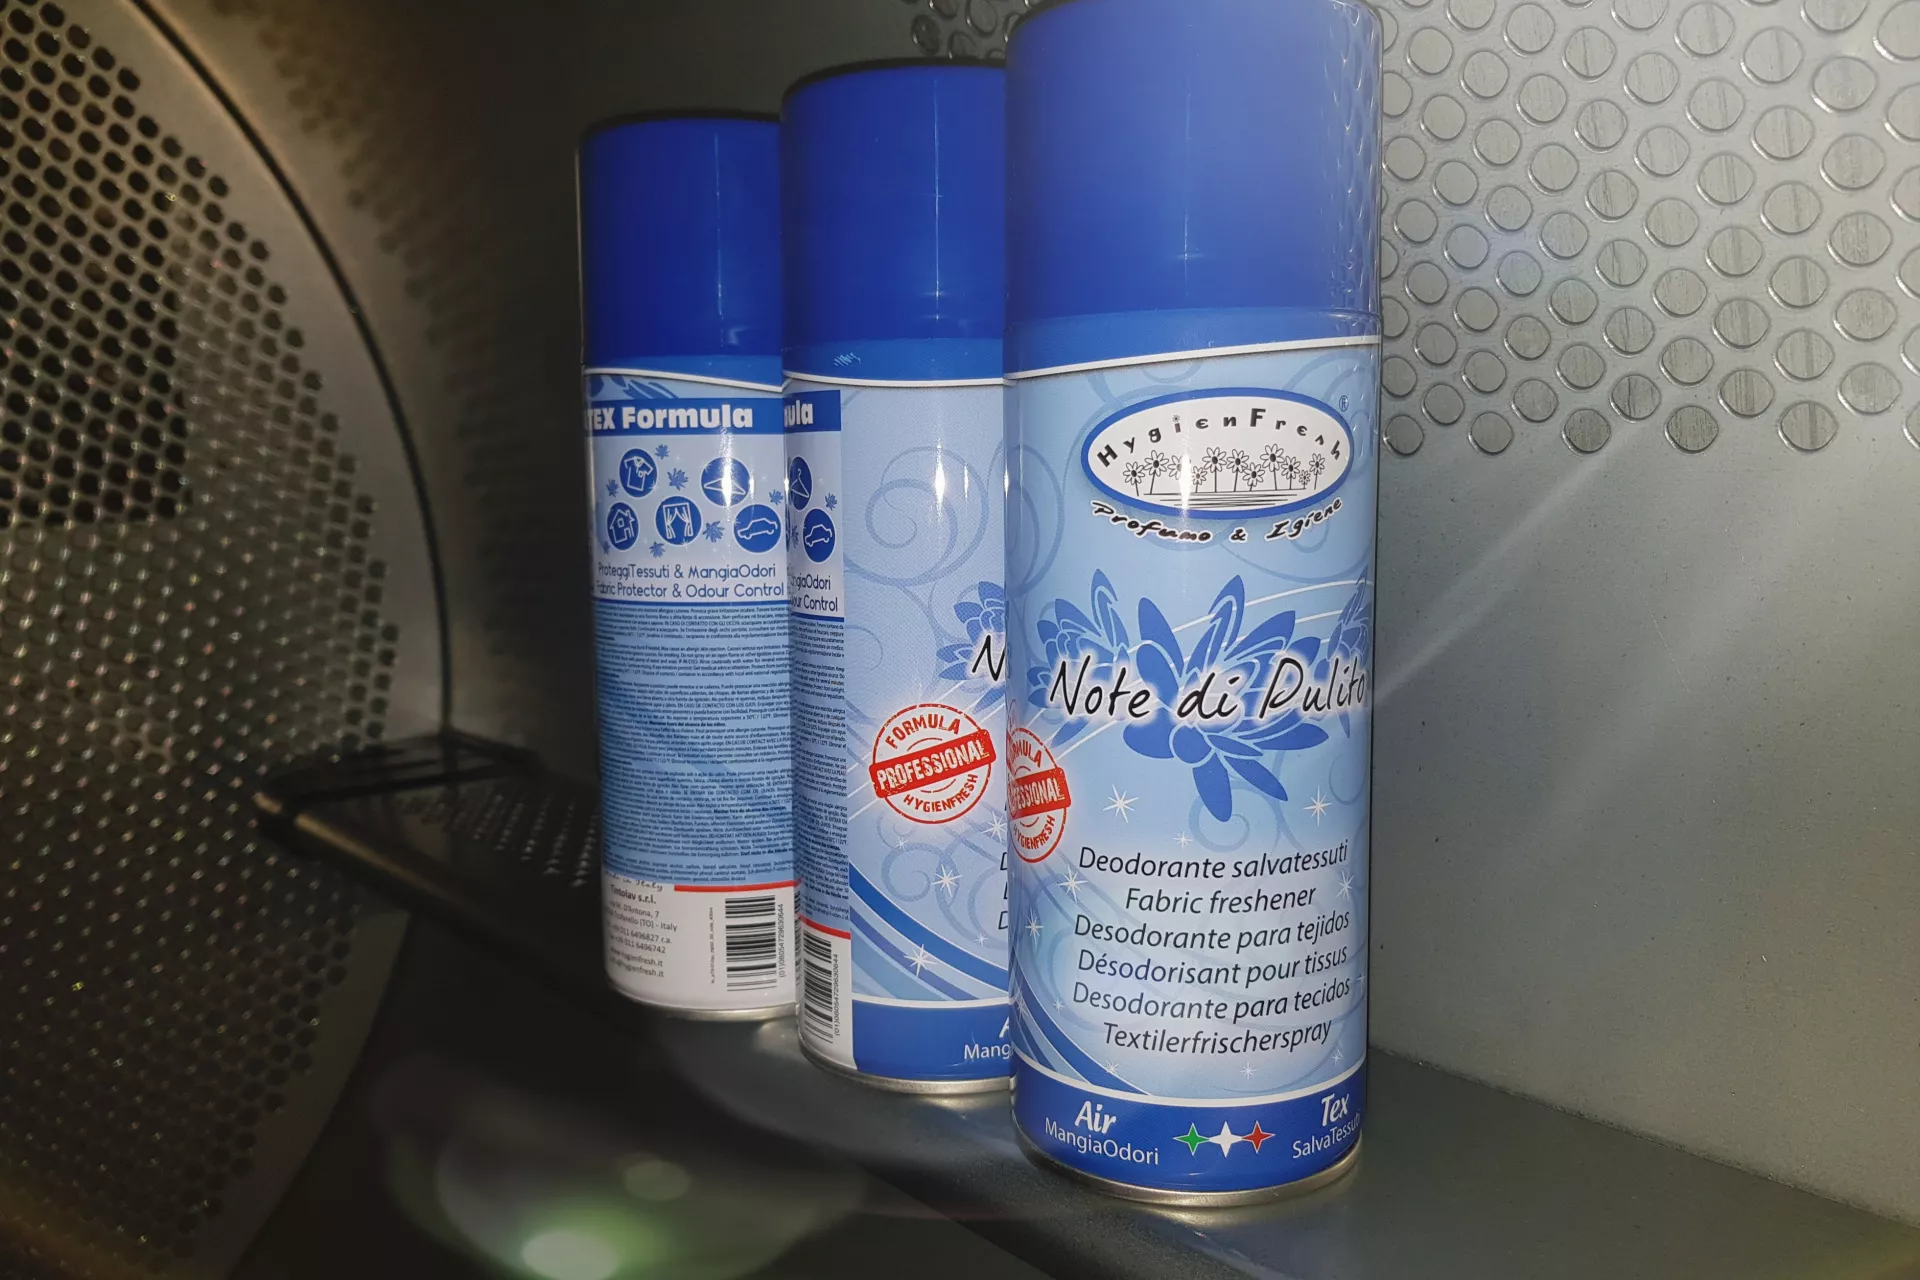 HygienFresh Deodorante Spray Salvatessuti Mangiaodori Cassetti